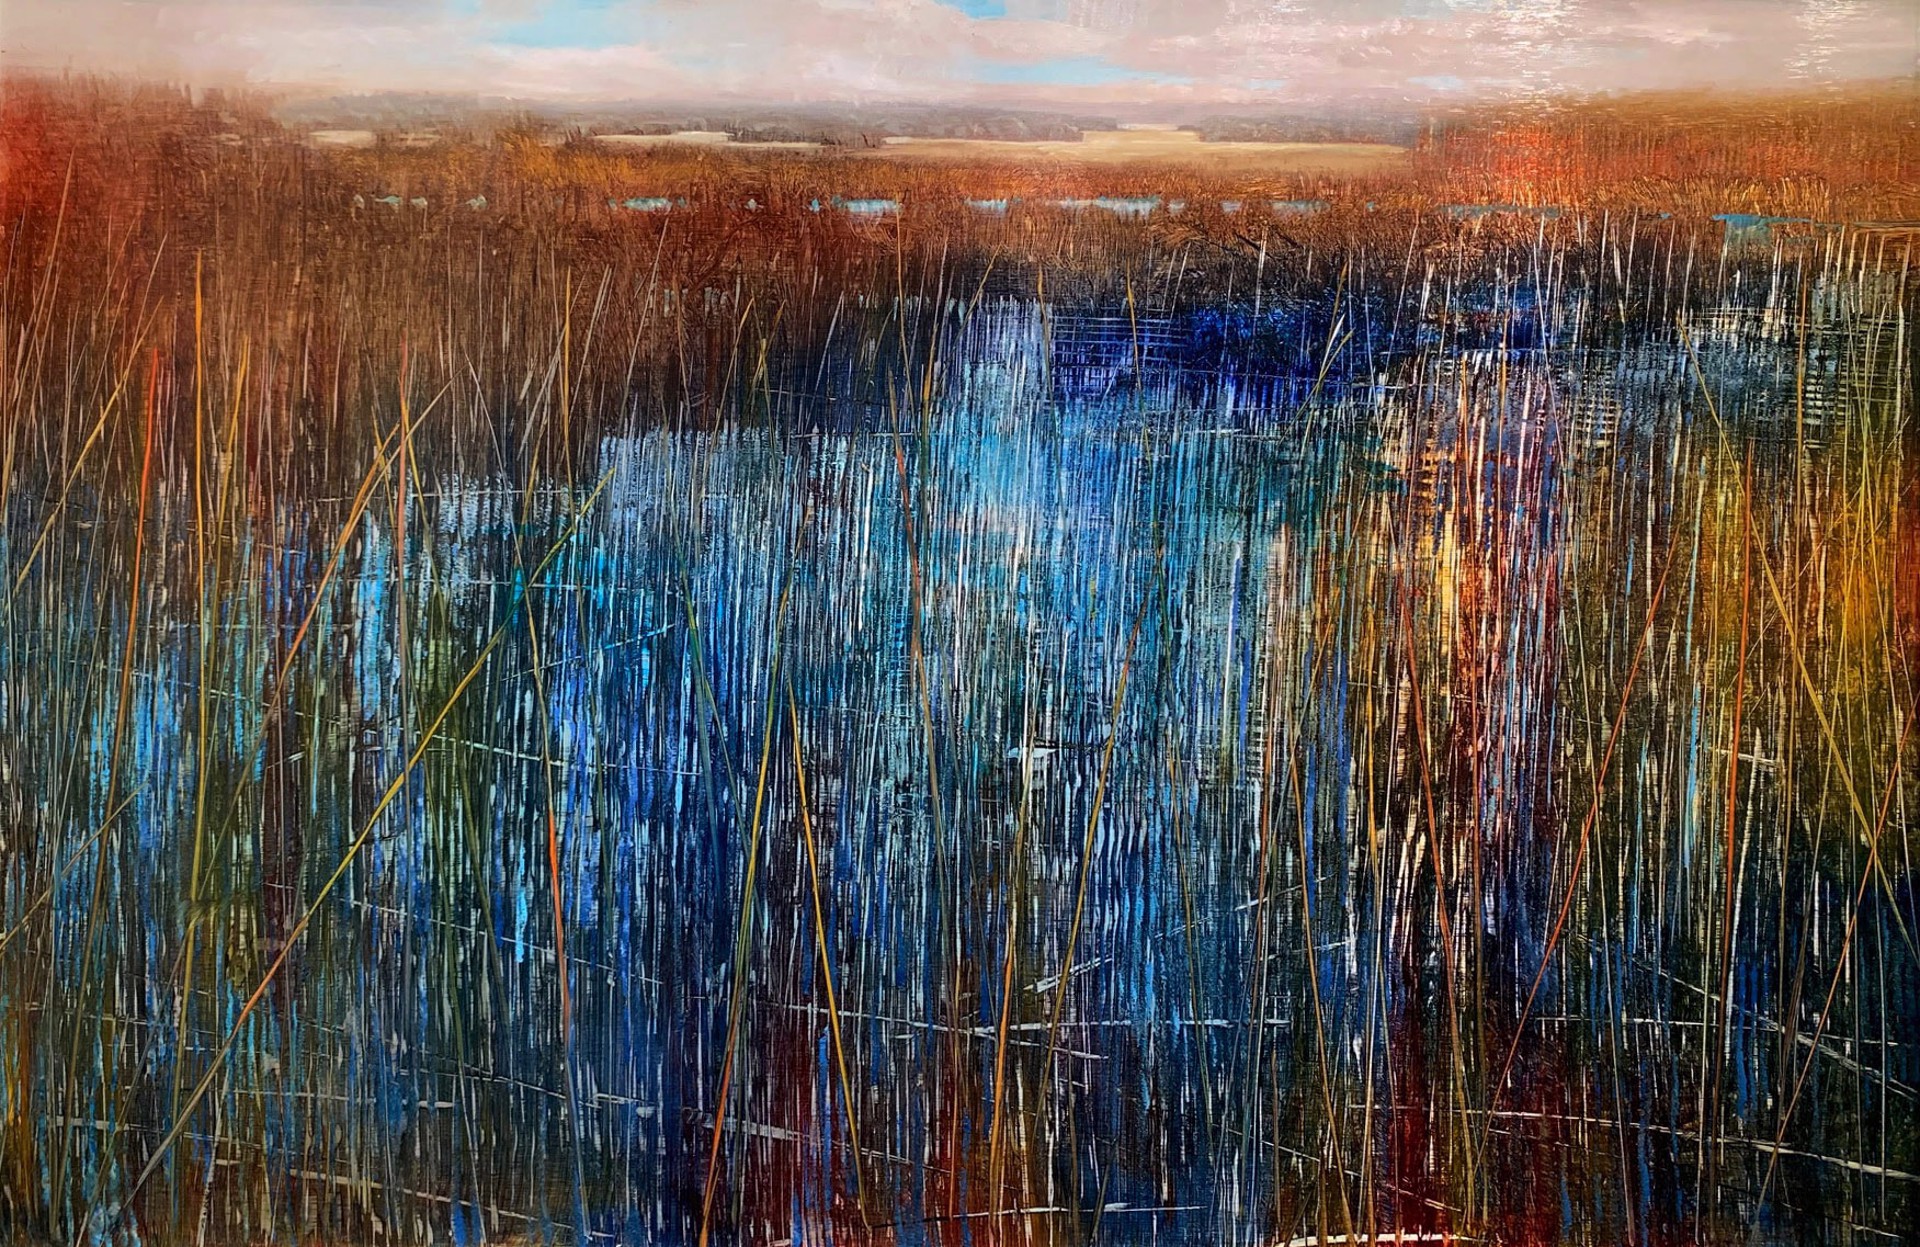 Tidewater Meadows by David Dunlop